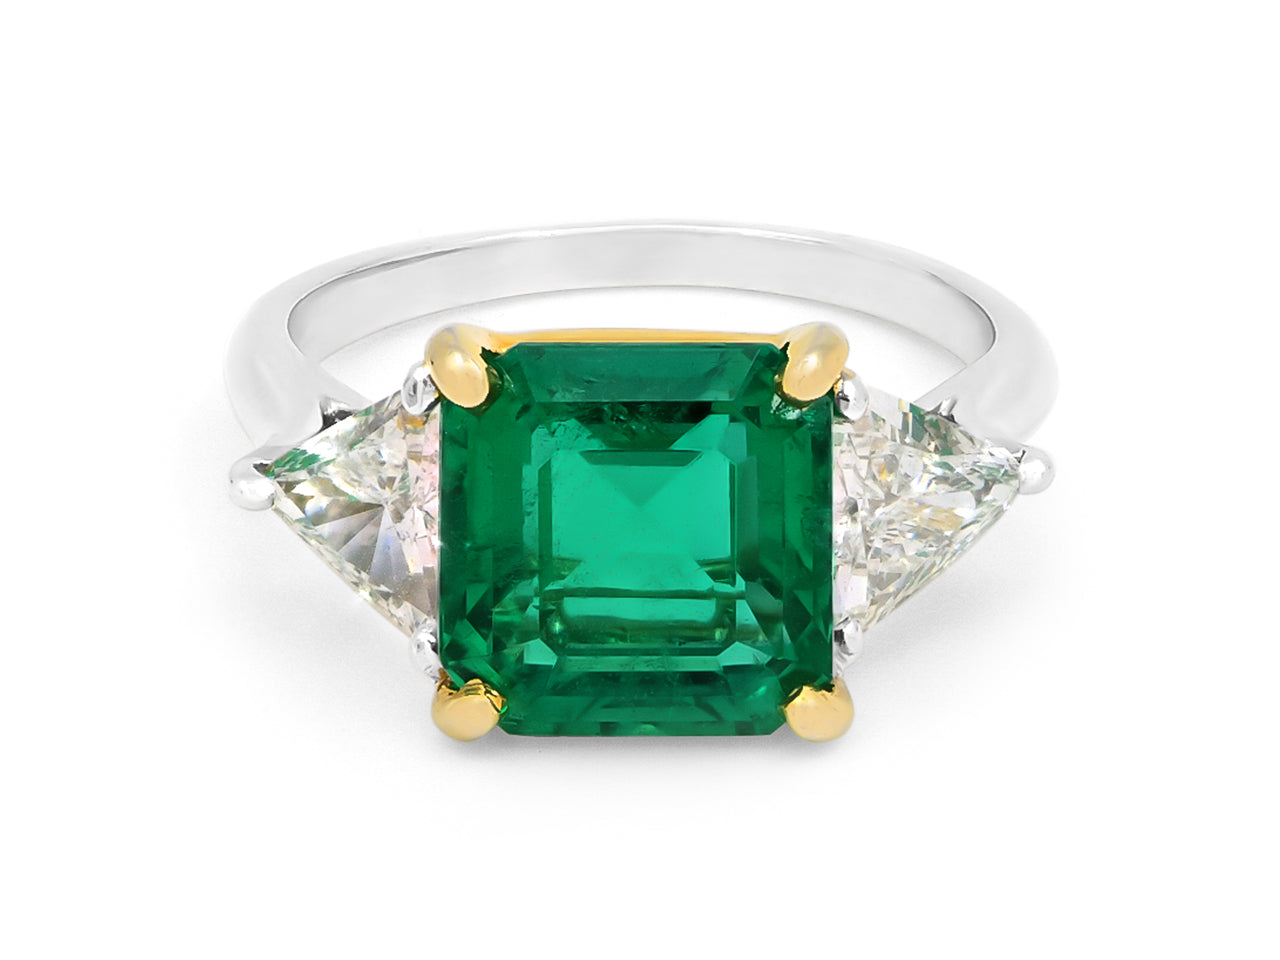 Shop Online Kazanjian Colombian Emerald, 3.26 carats, Ring in Platinum